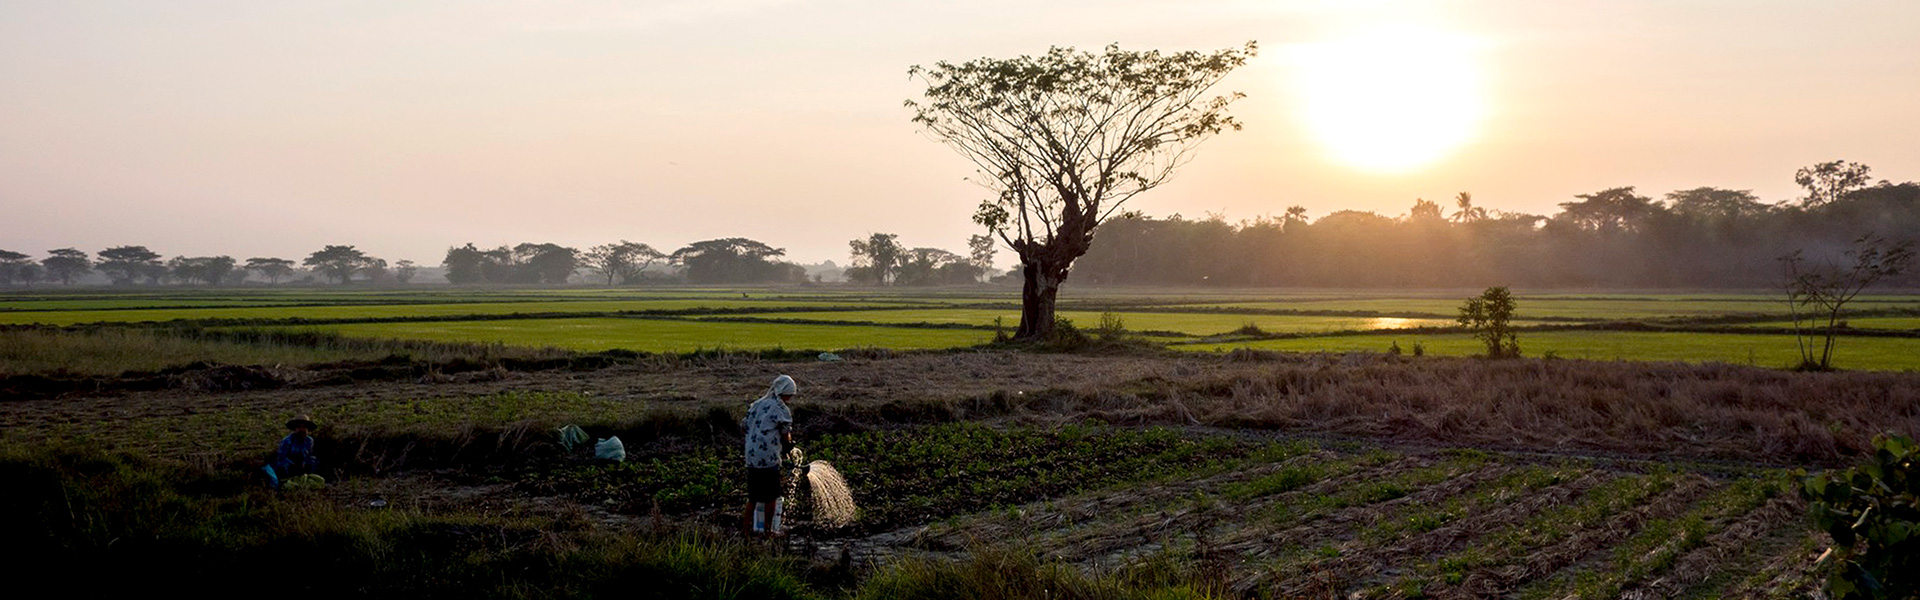 myanmar-landscape-farmer